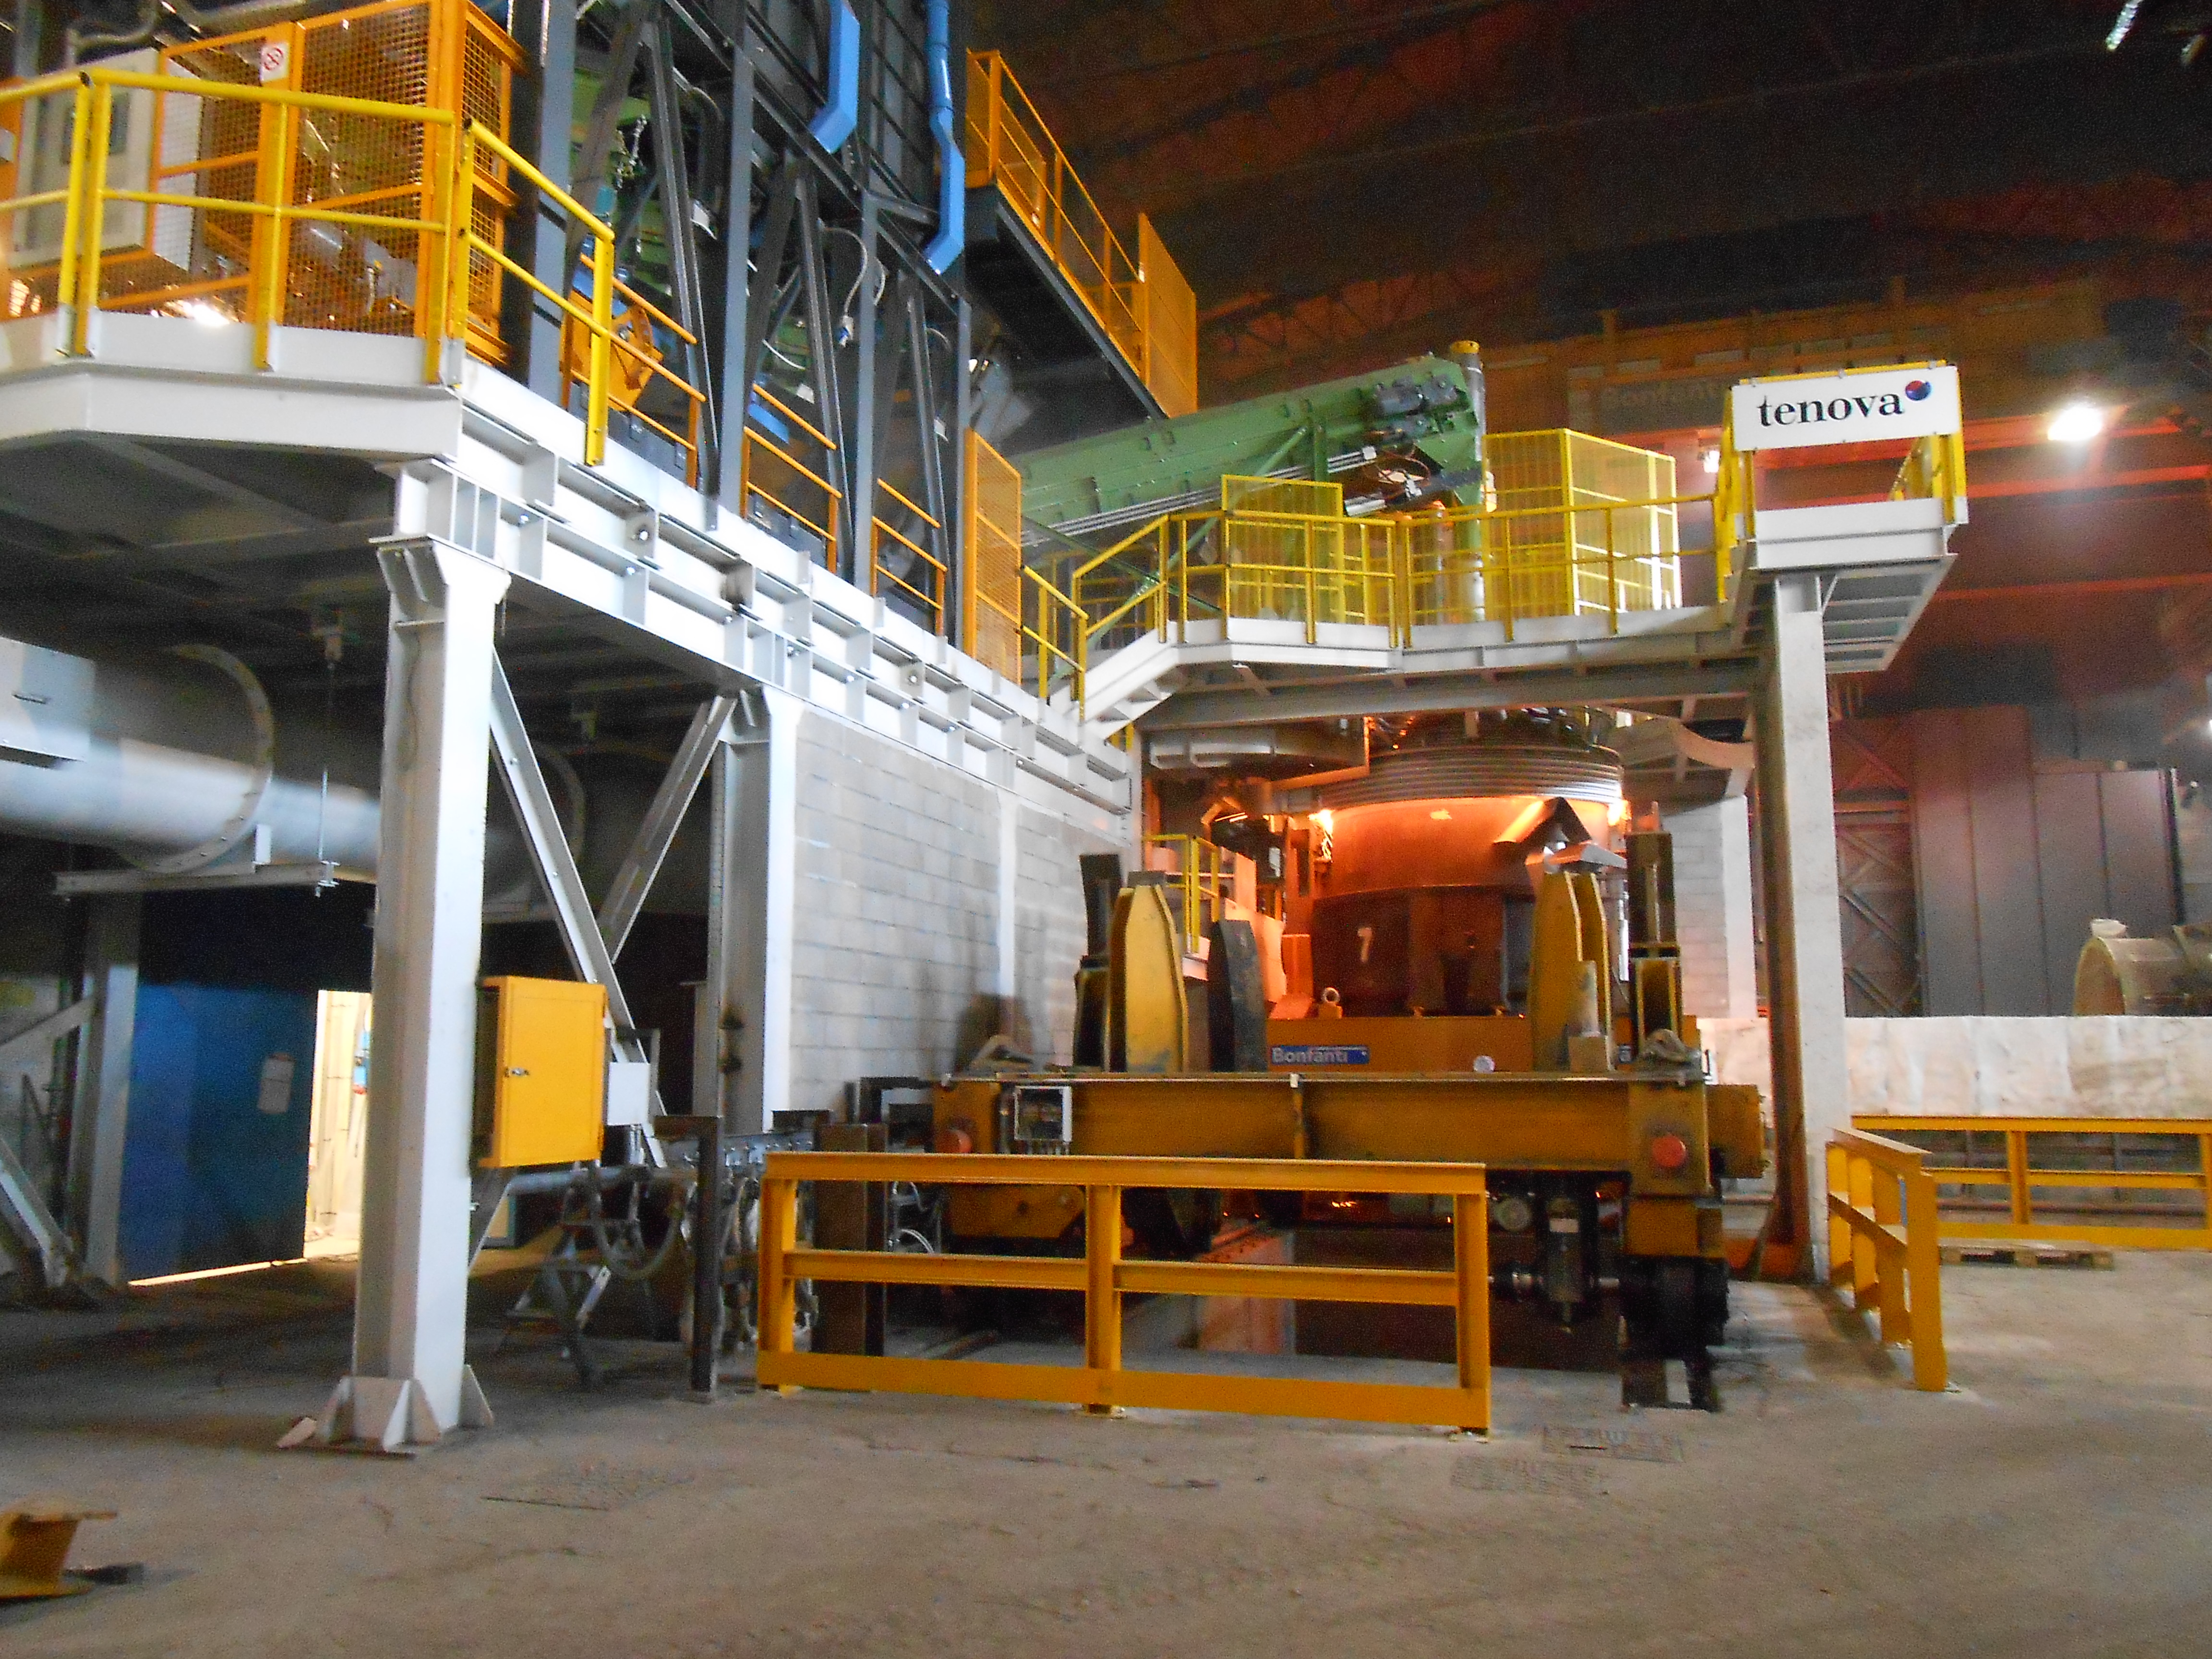 Tenova Ladle Metallurgy Furnaces and Trimming Station